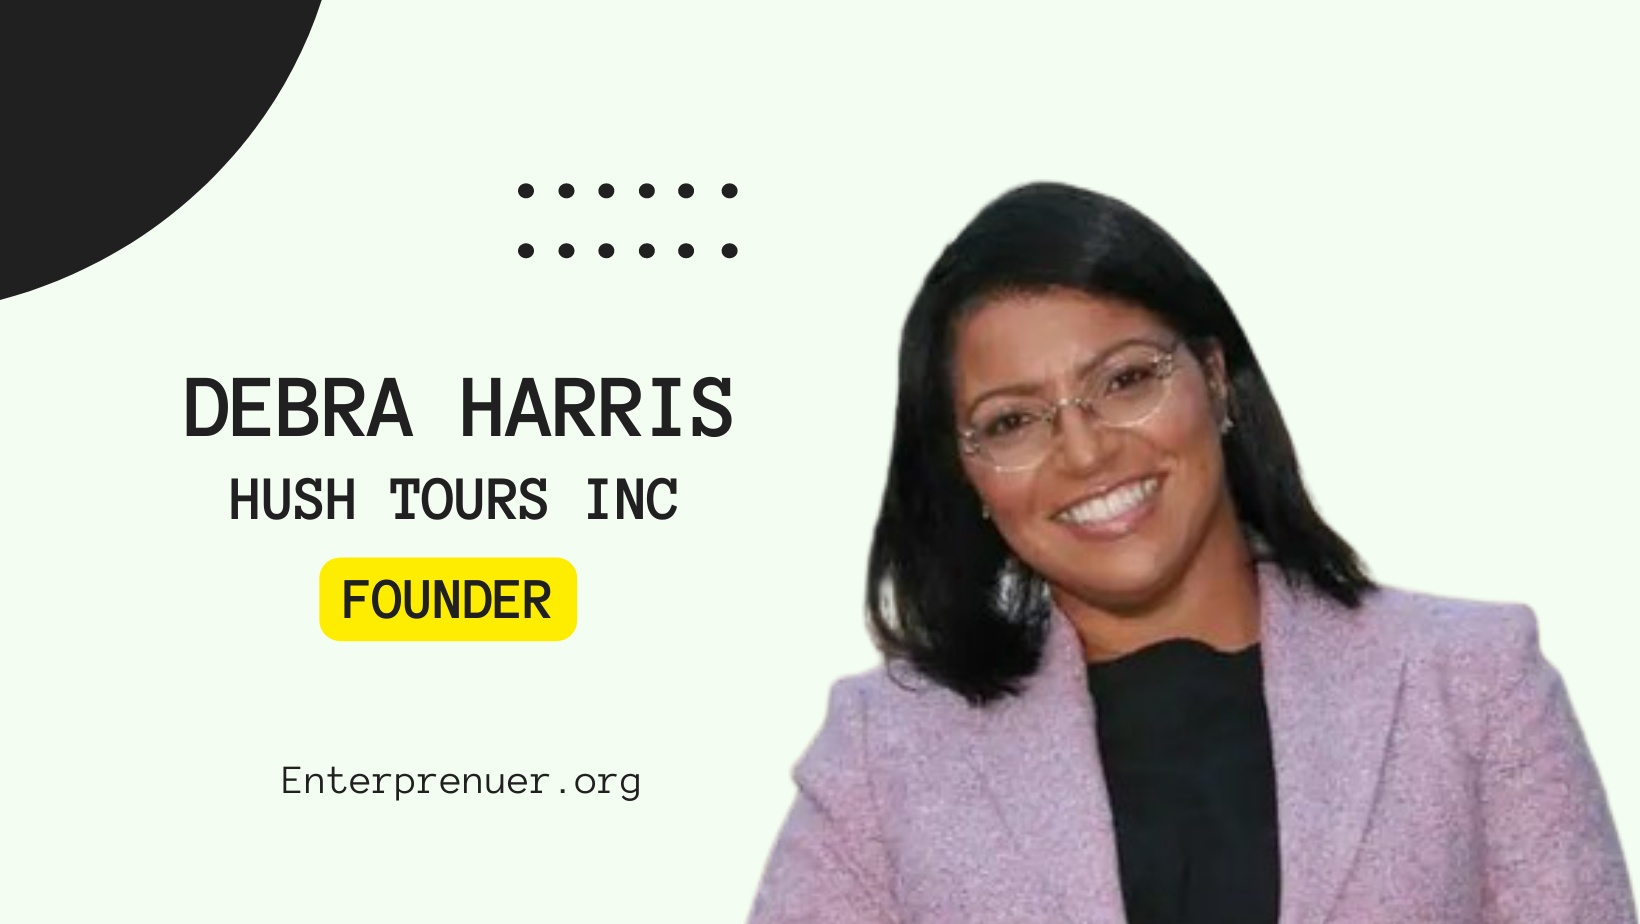 Debra Harris Founder of Hush Tours Inc